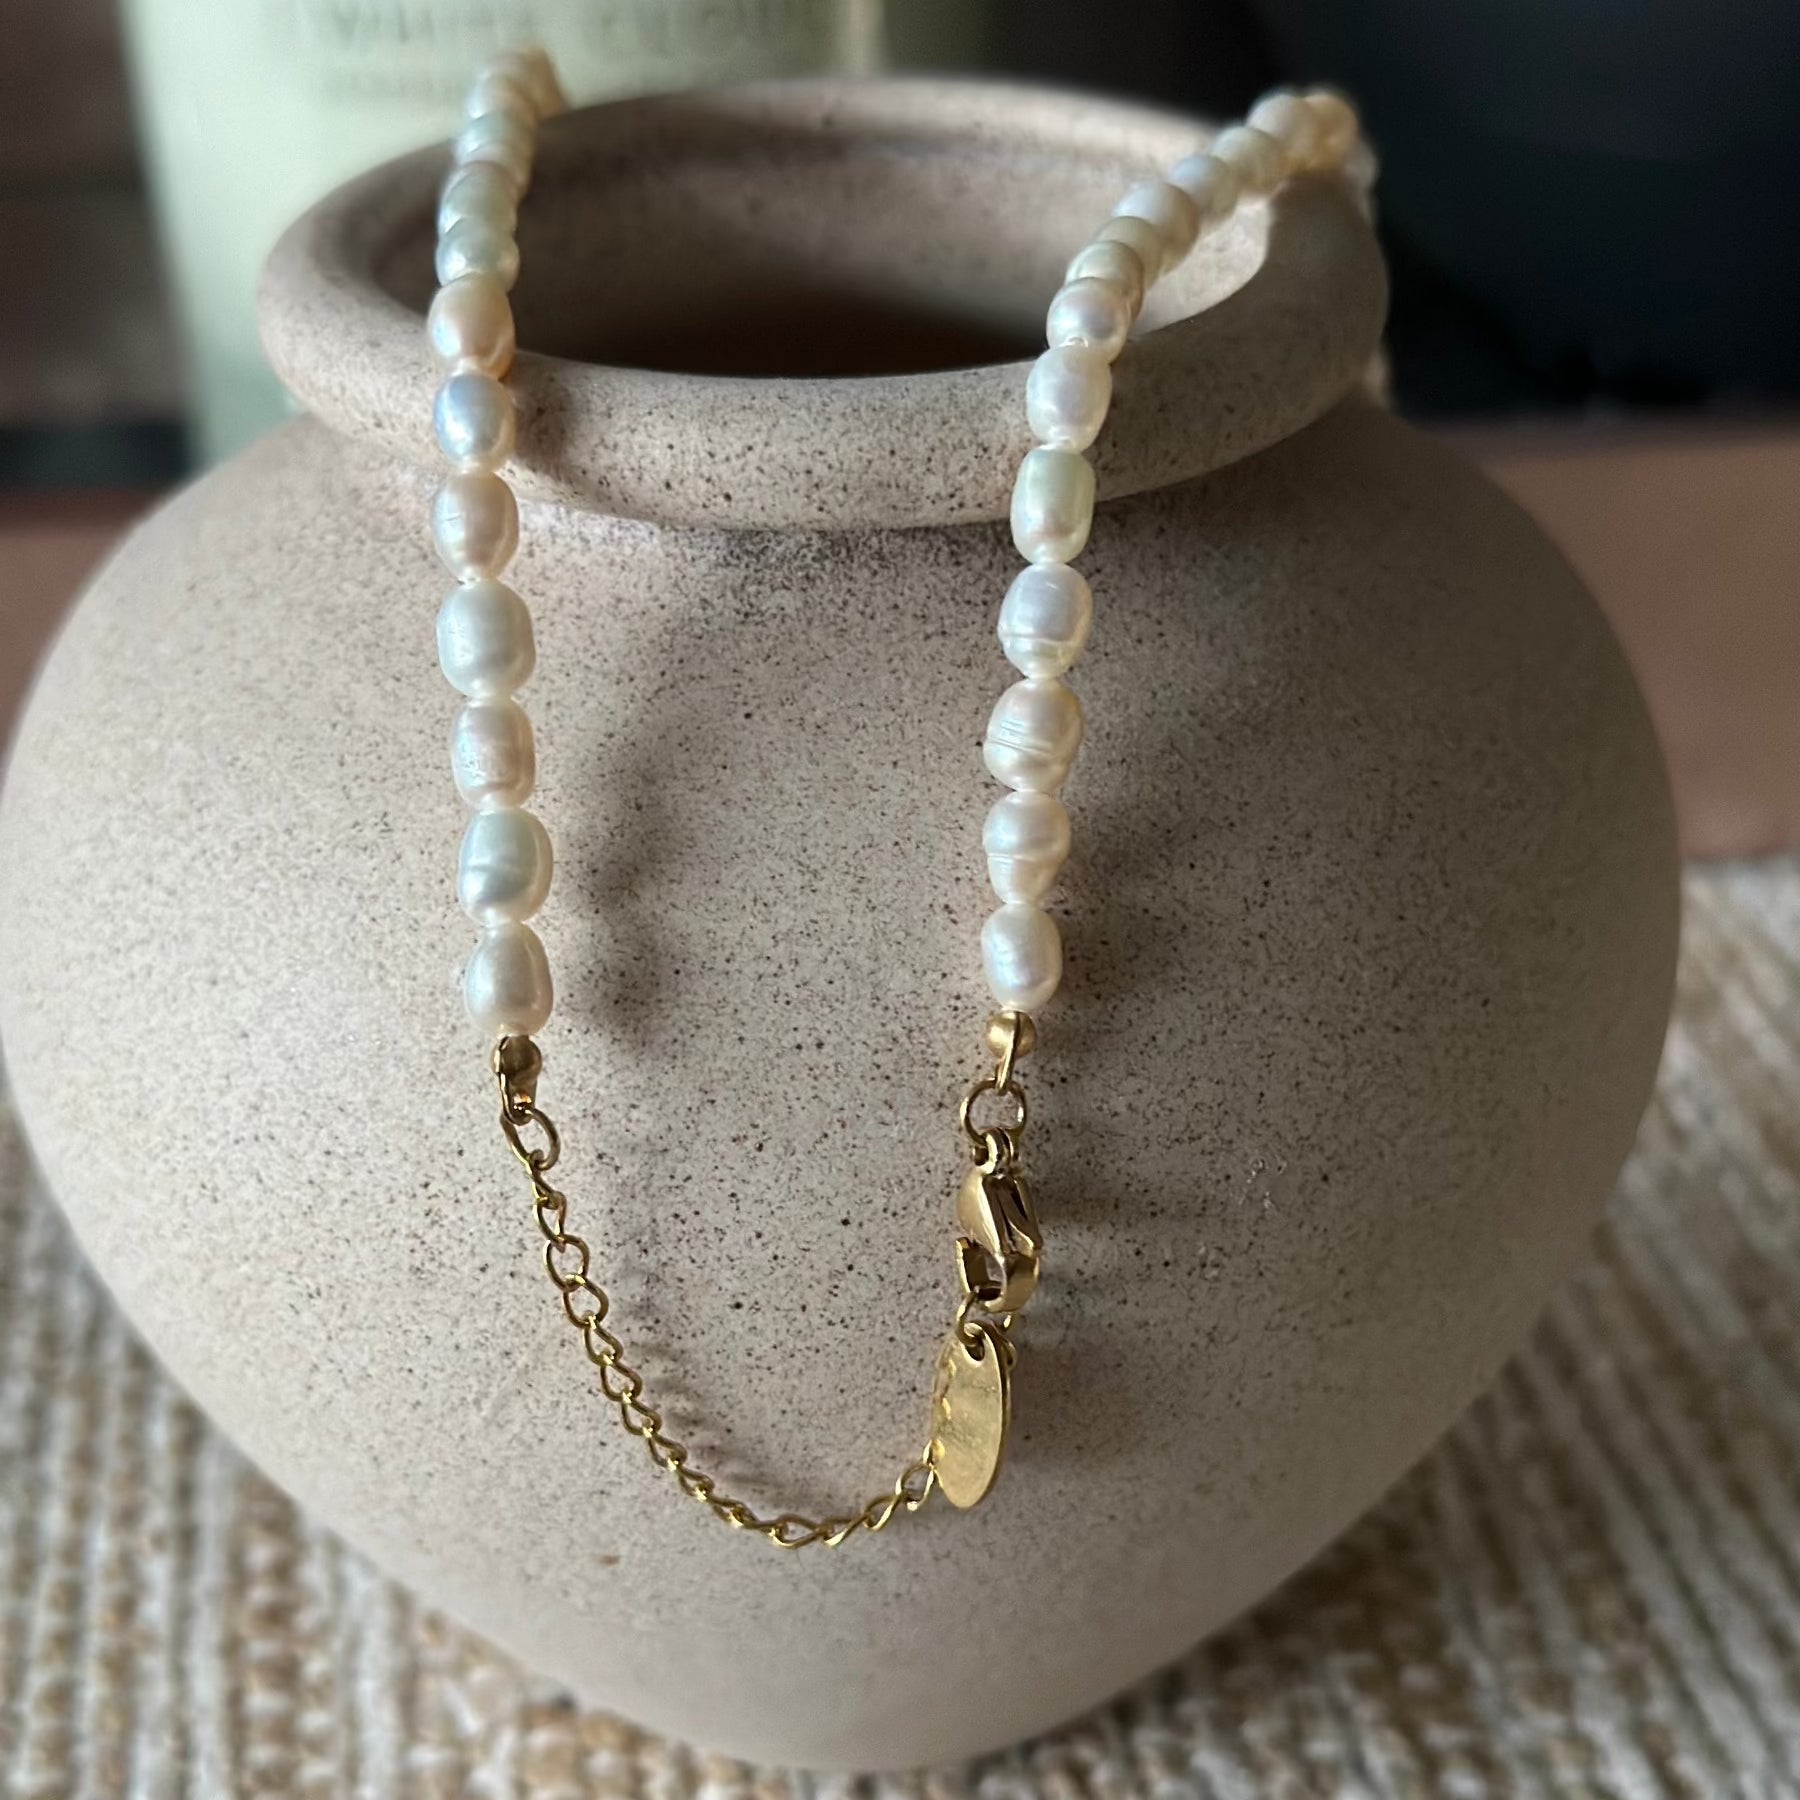 Close up of necklace clasp - Kalalau Pearl Choker Necklace